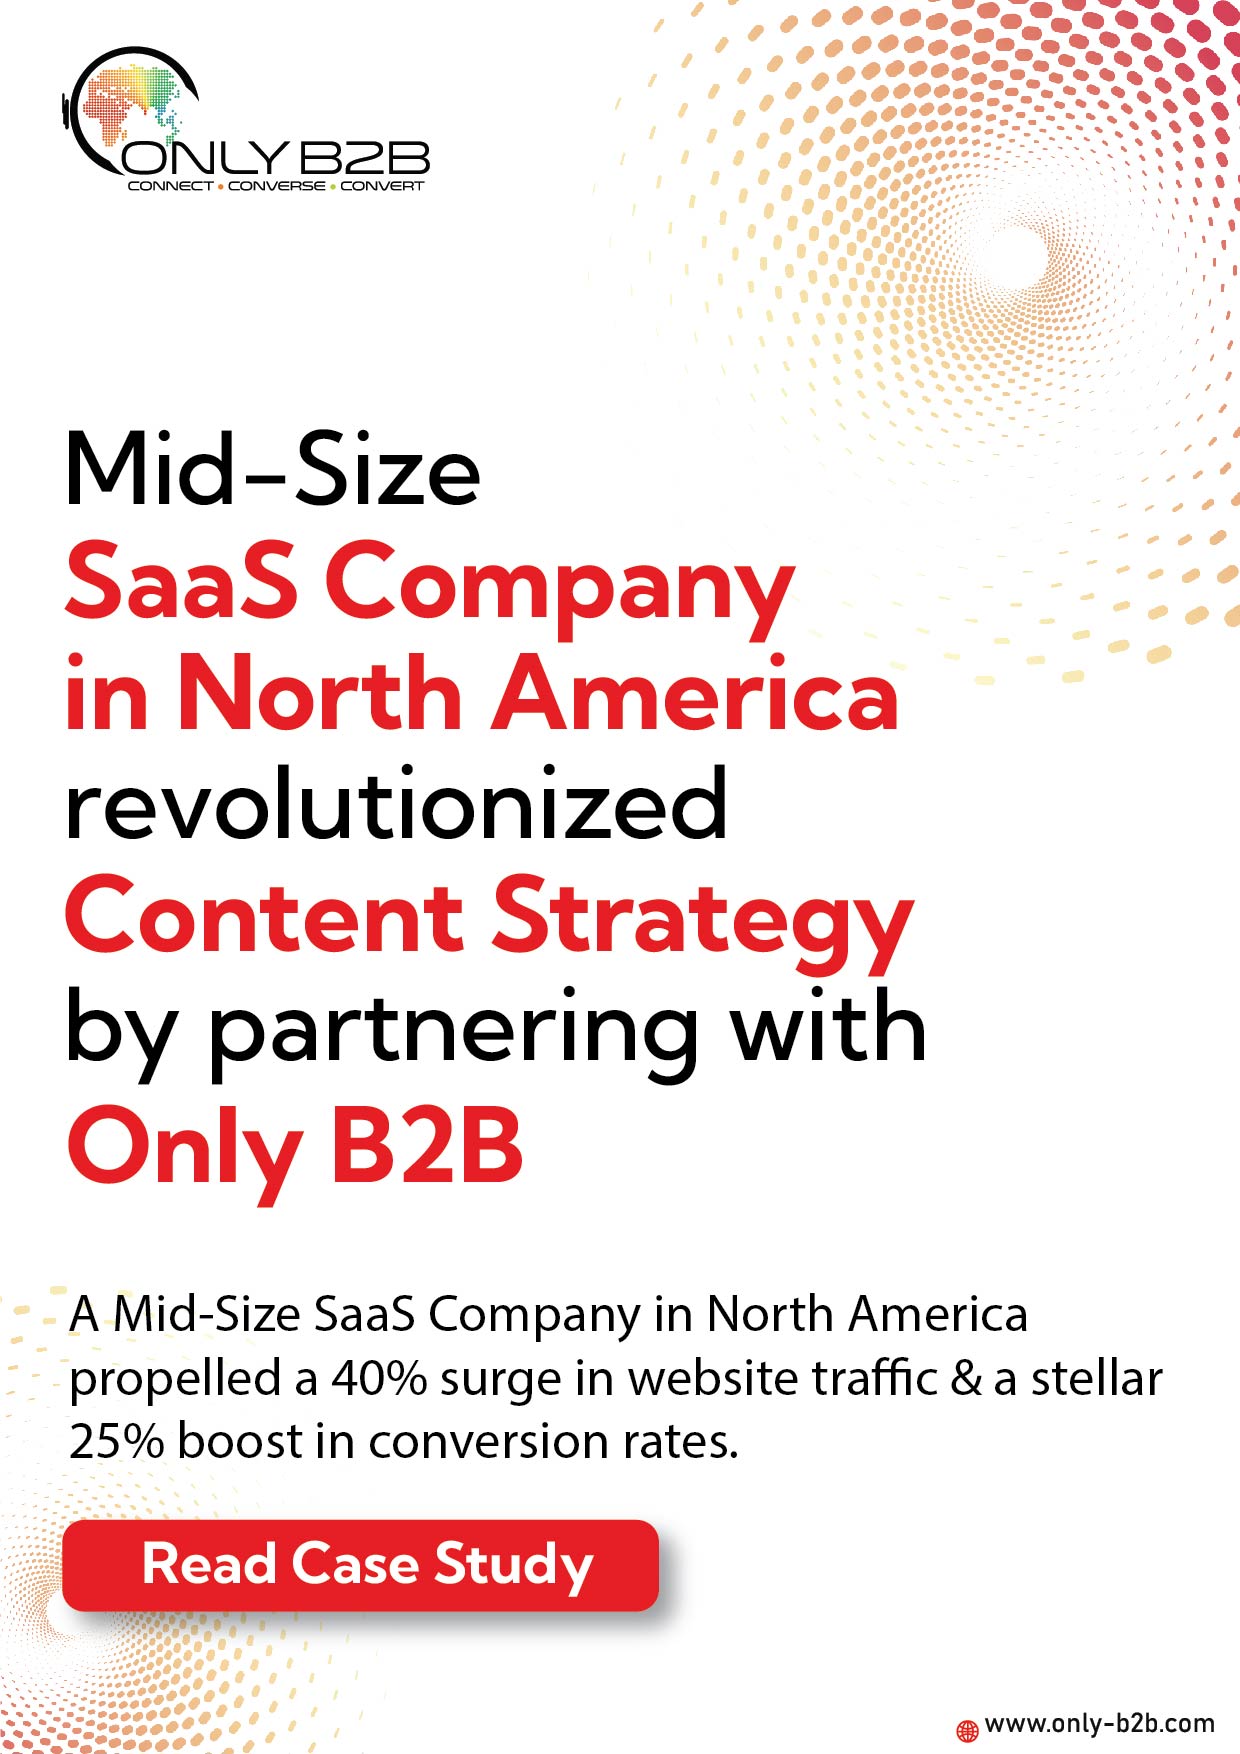 b2b sales lead generation companies